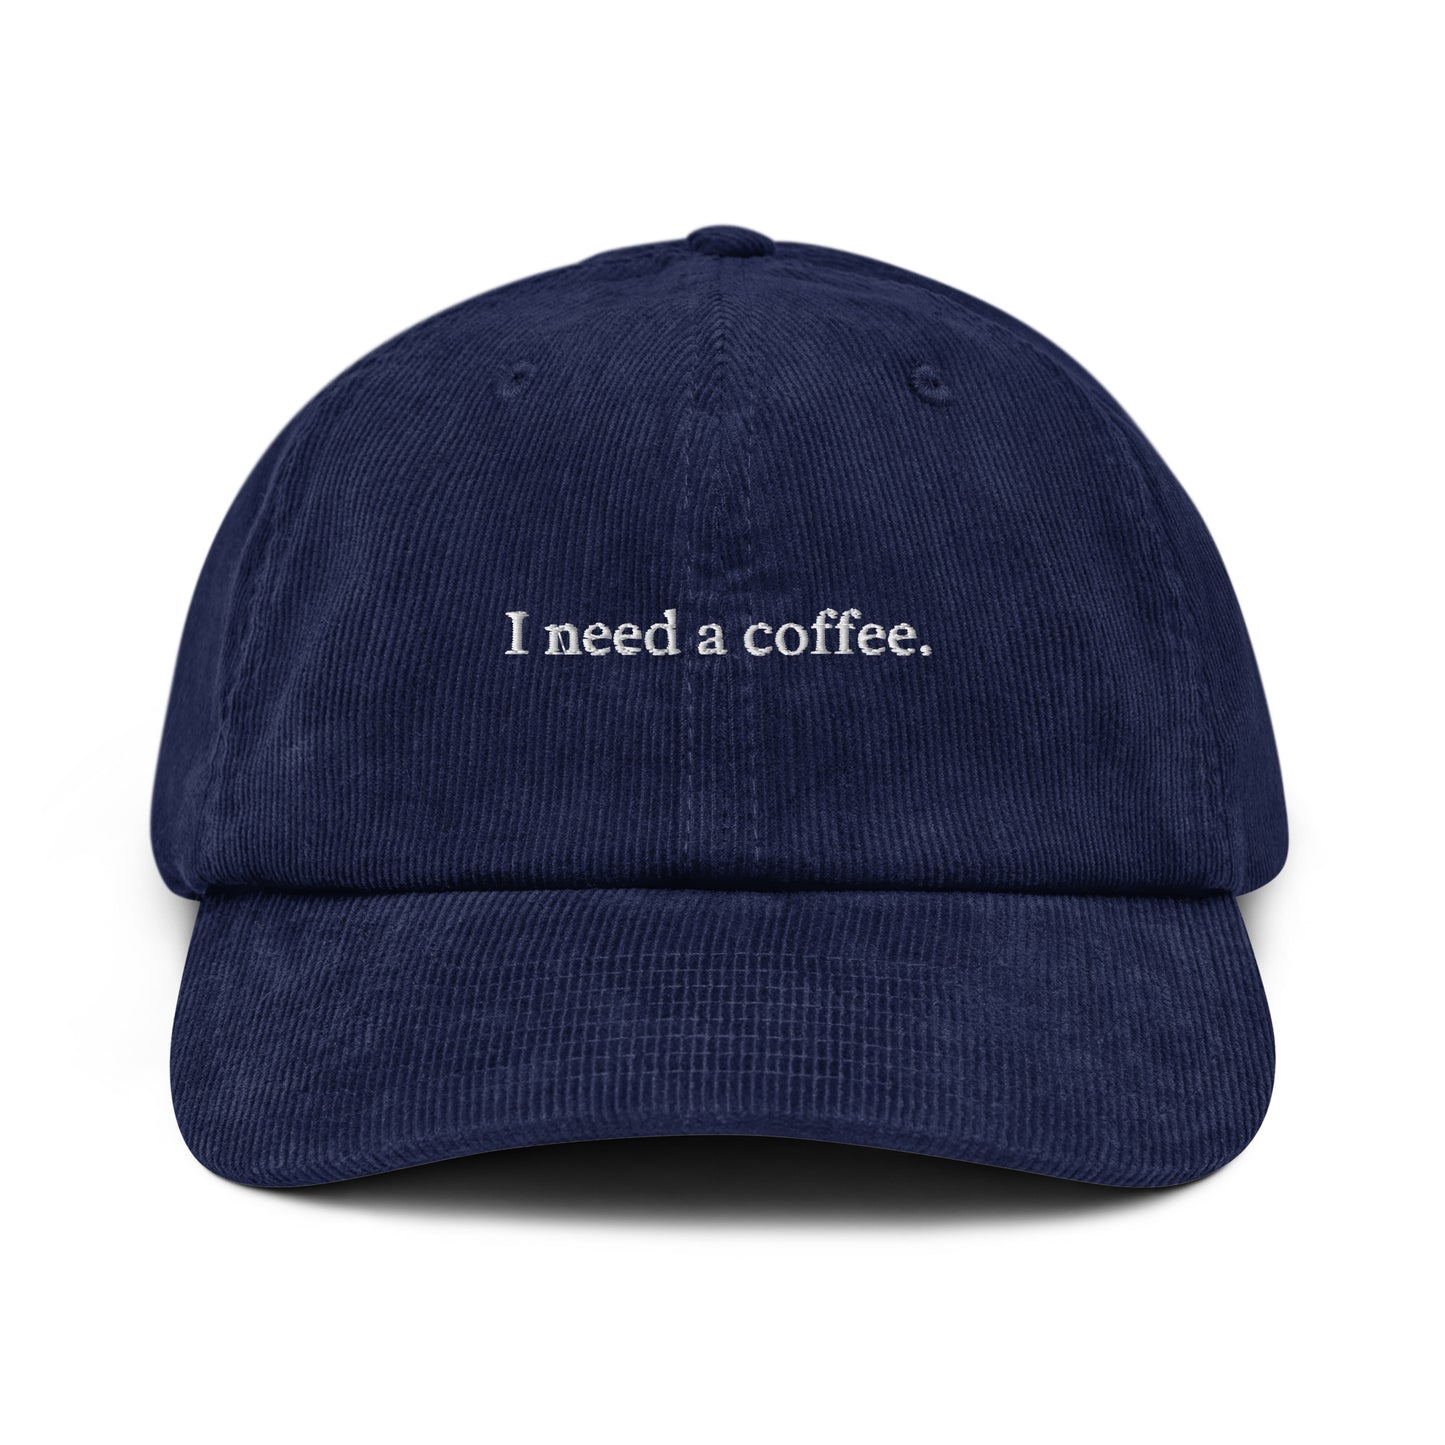 "I need a coffee" Corduroy Hat